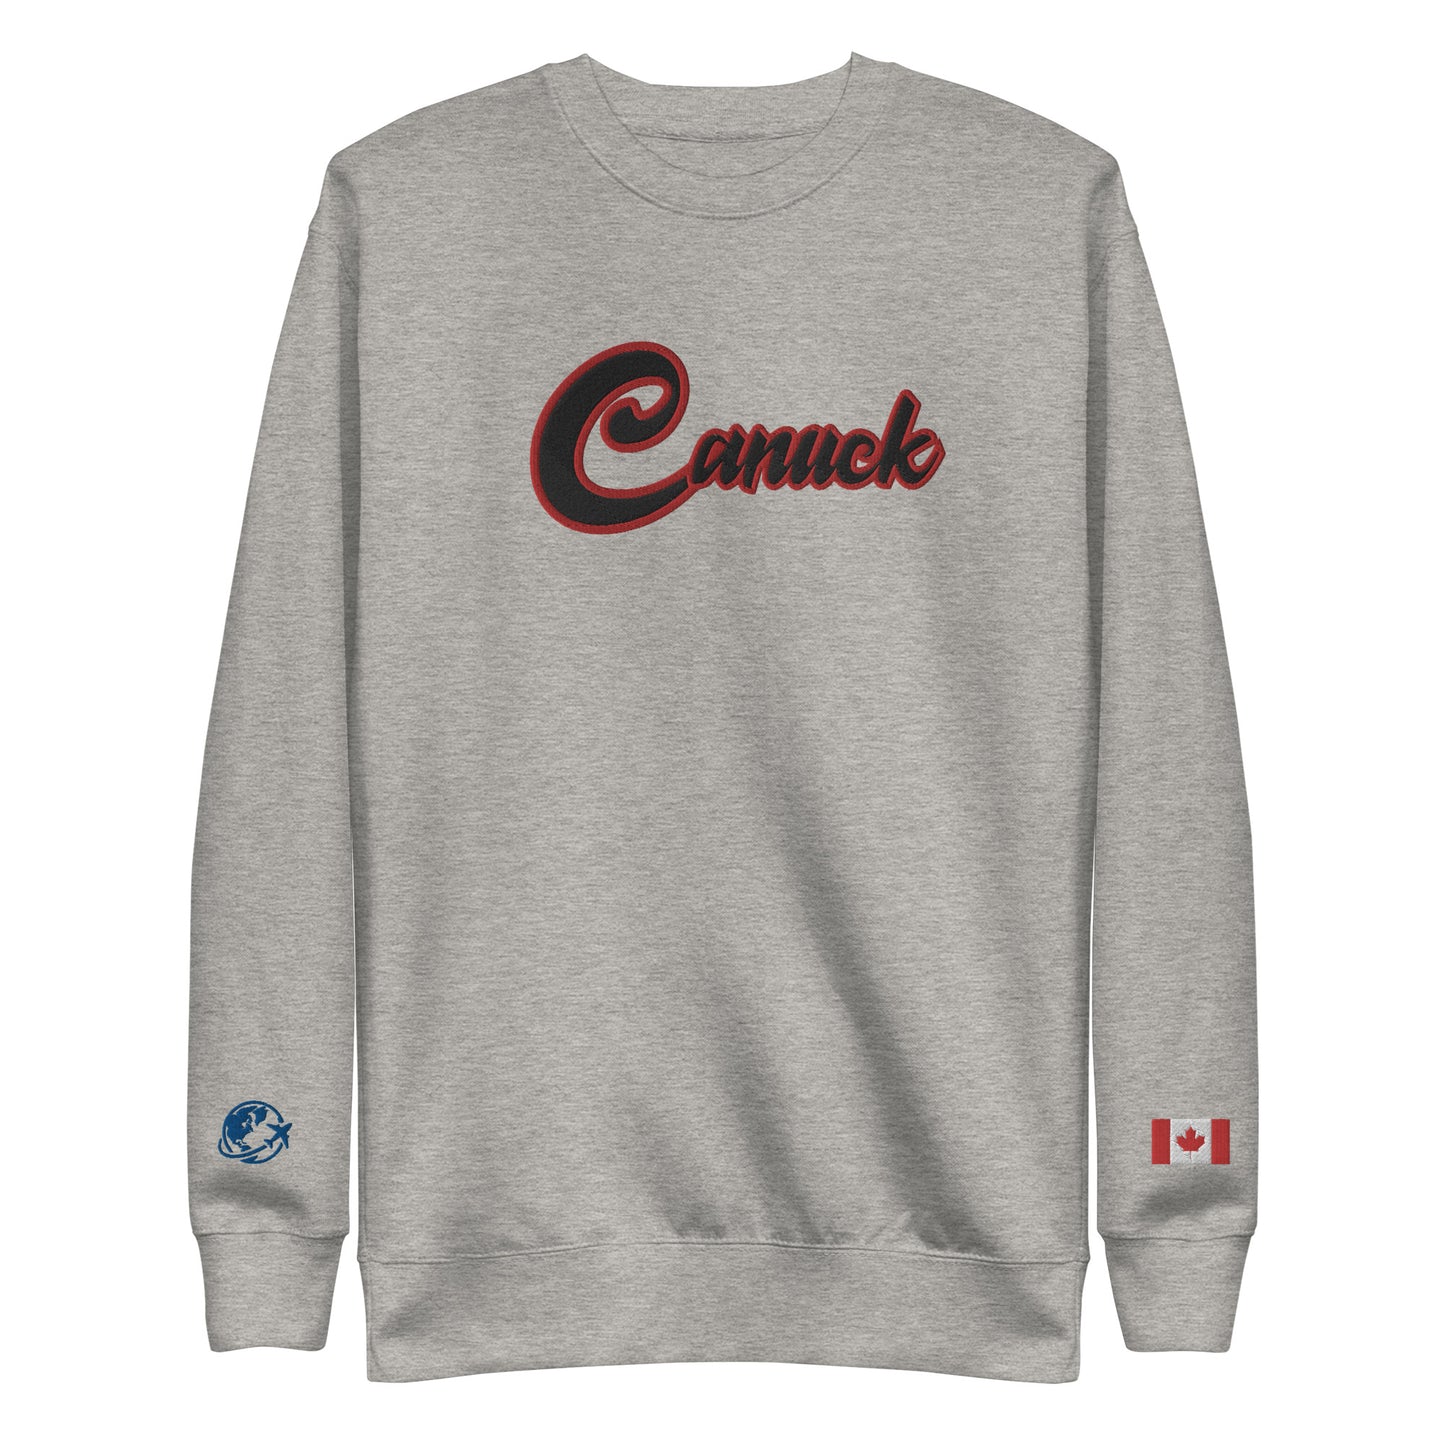 BigSmoke Soprano Clothing: BigSmoke Soprano Worldwide Collection: Canada Sweatshirt (Canada Edition)